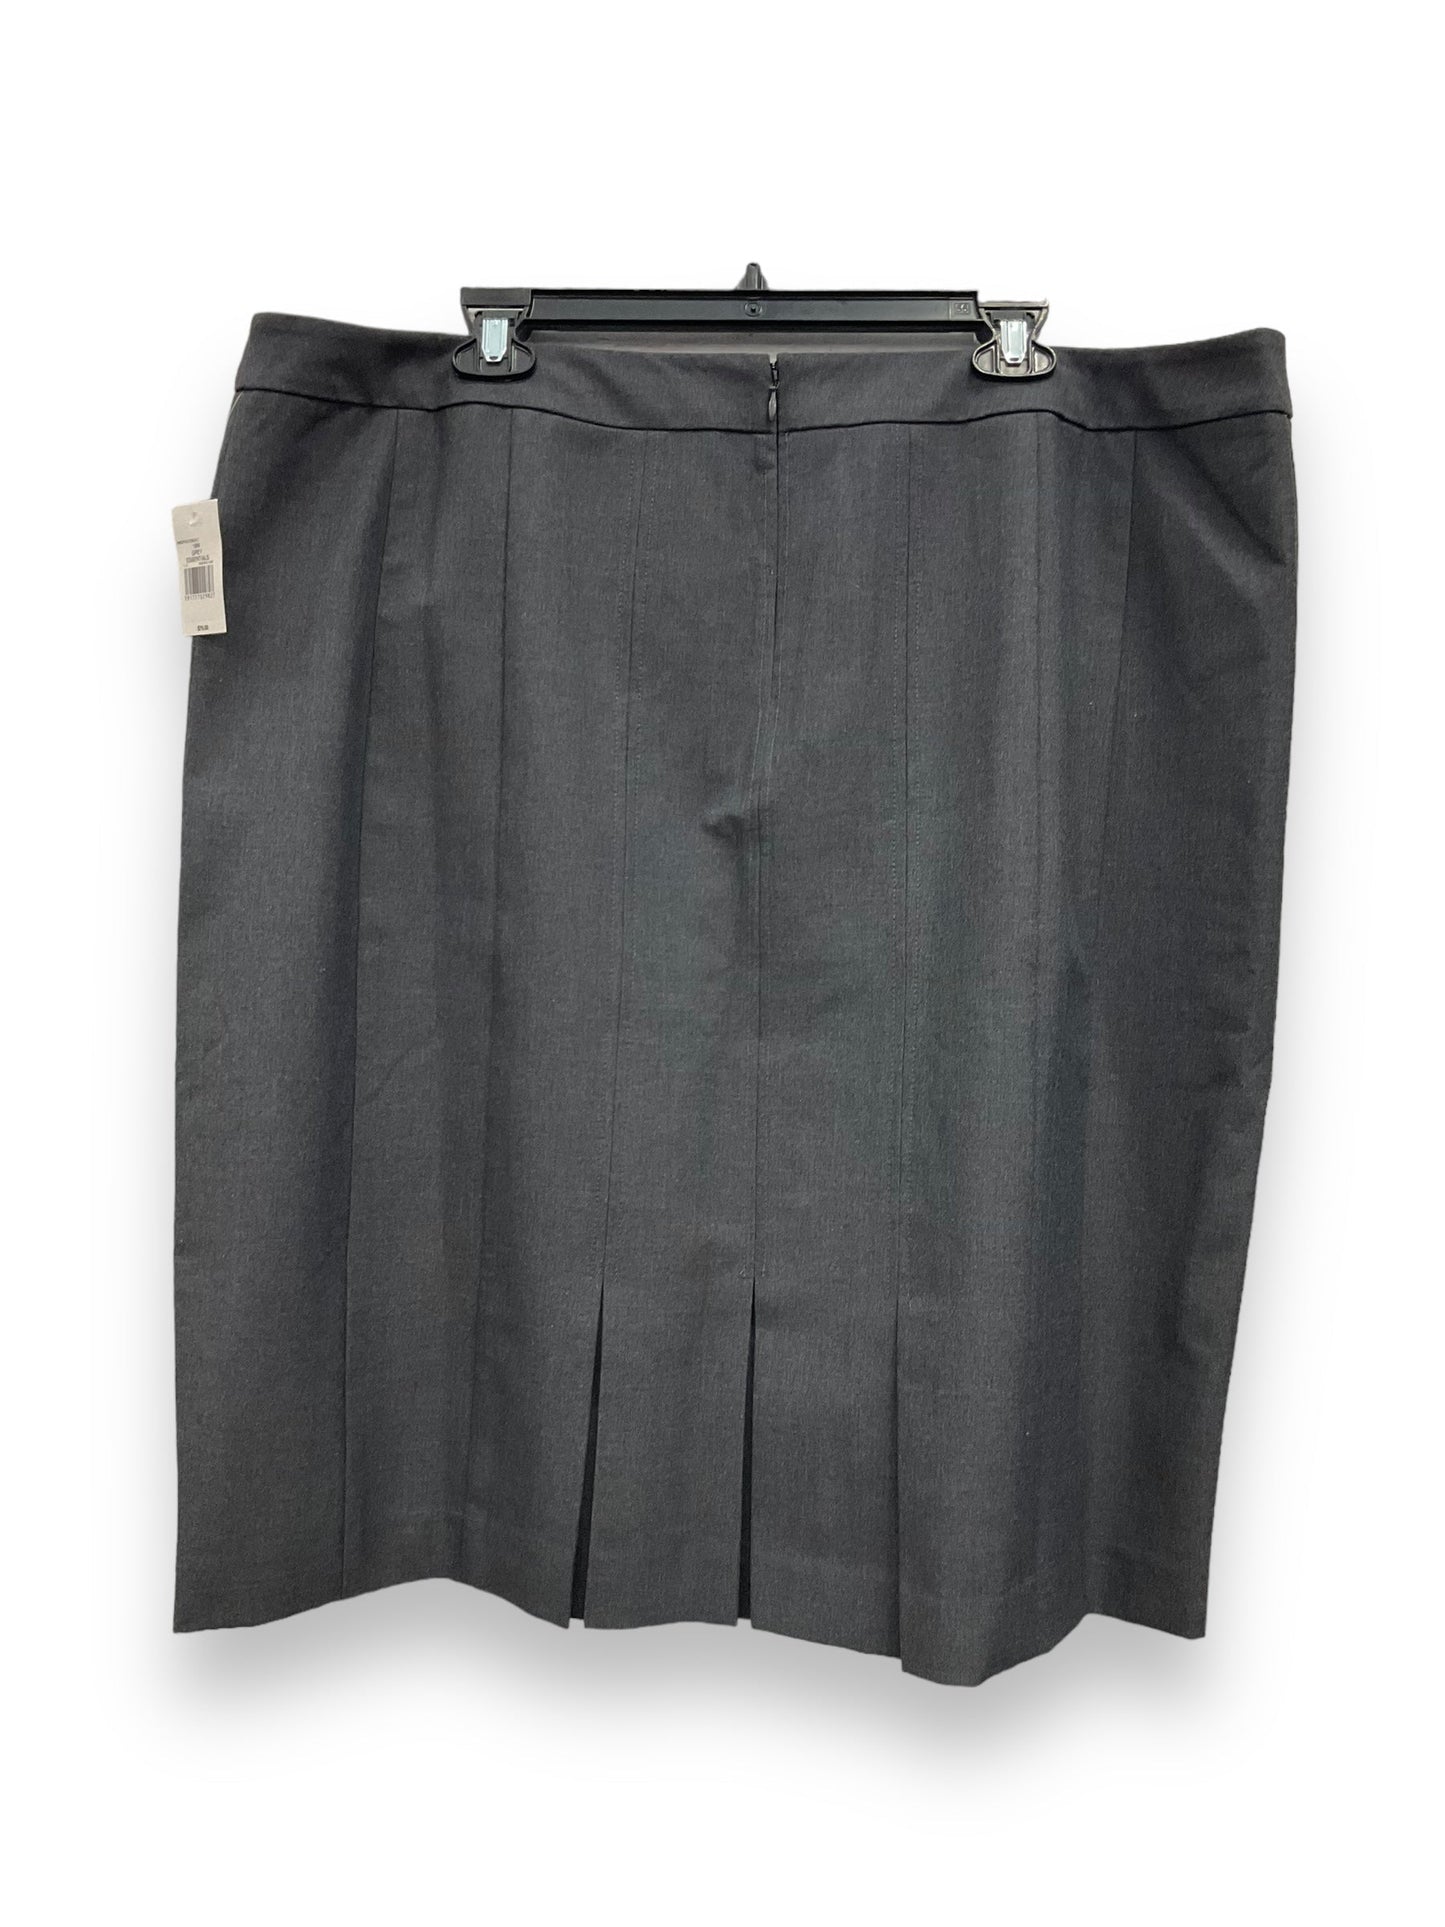 Grey Skirt Midi Limited, Size 1x